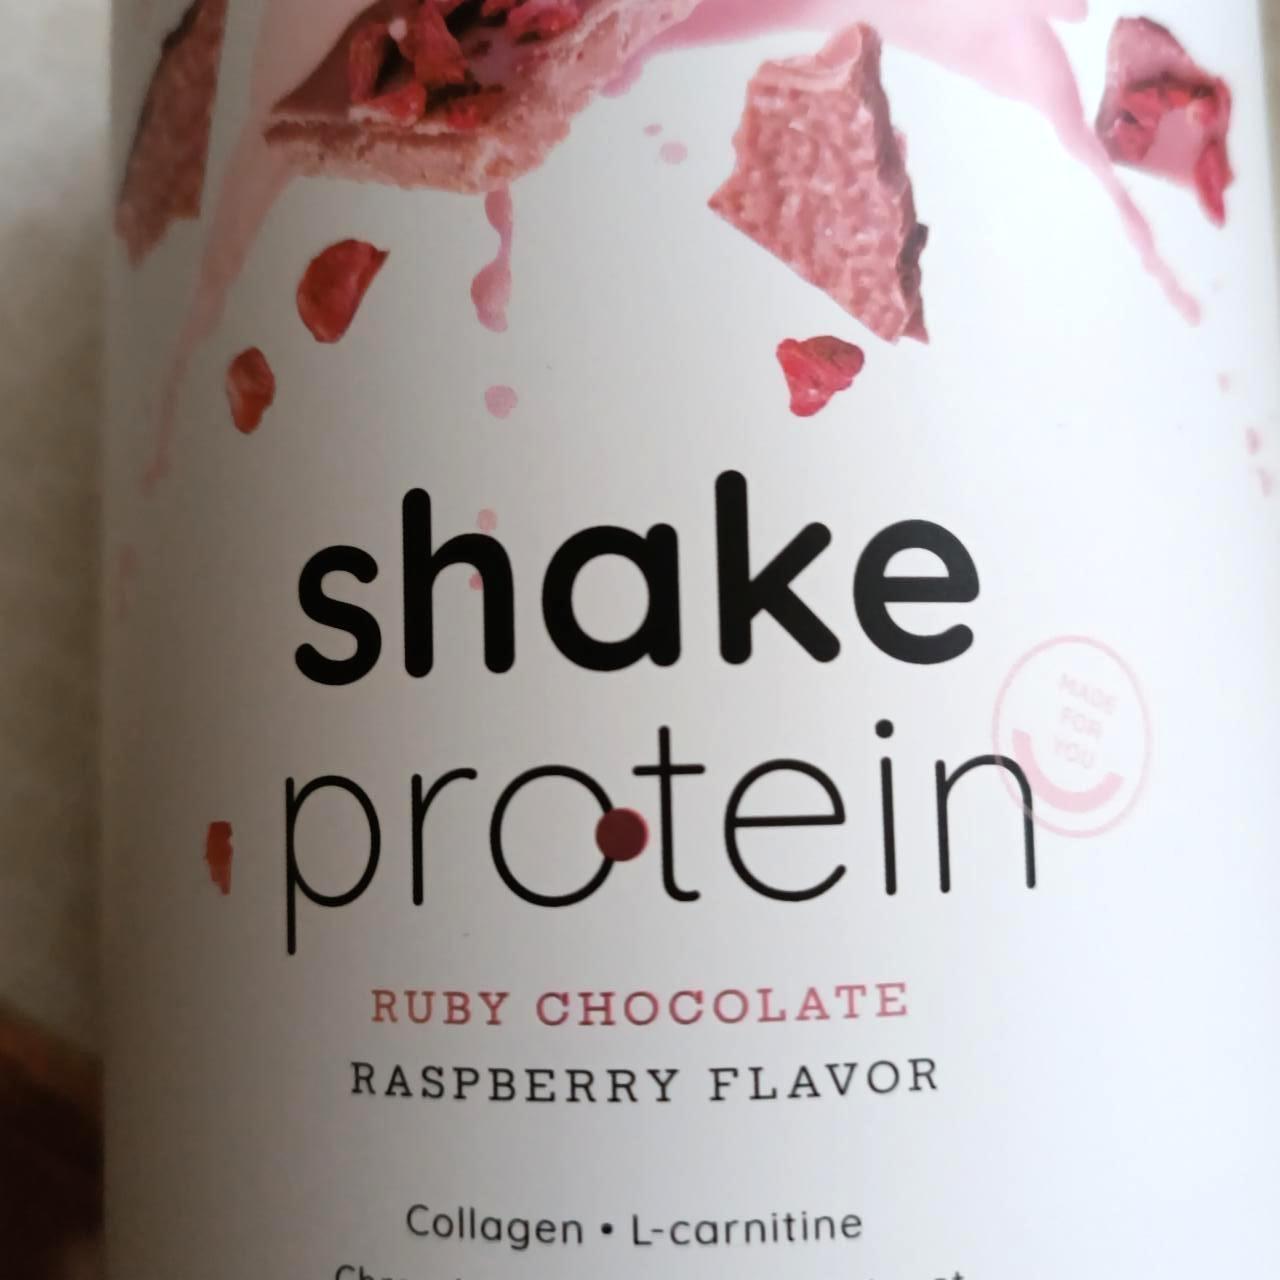 Képek - Shake protein ruby chocolate raspberry flavor Nutriversum